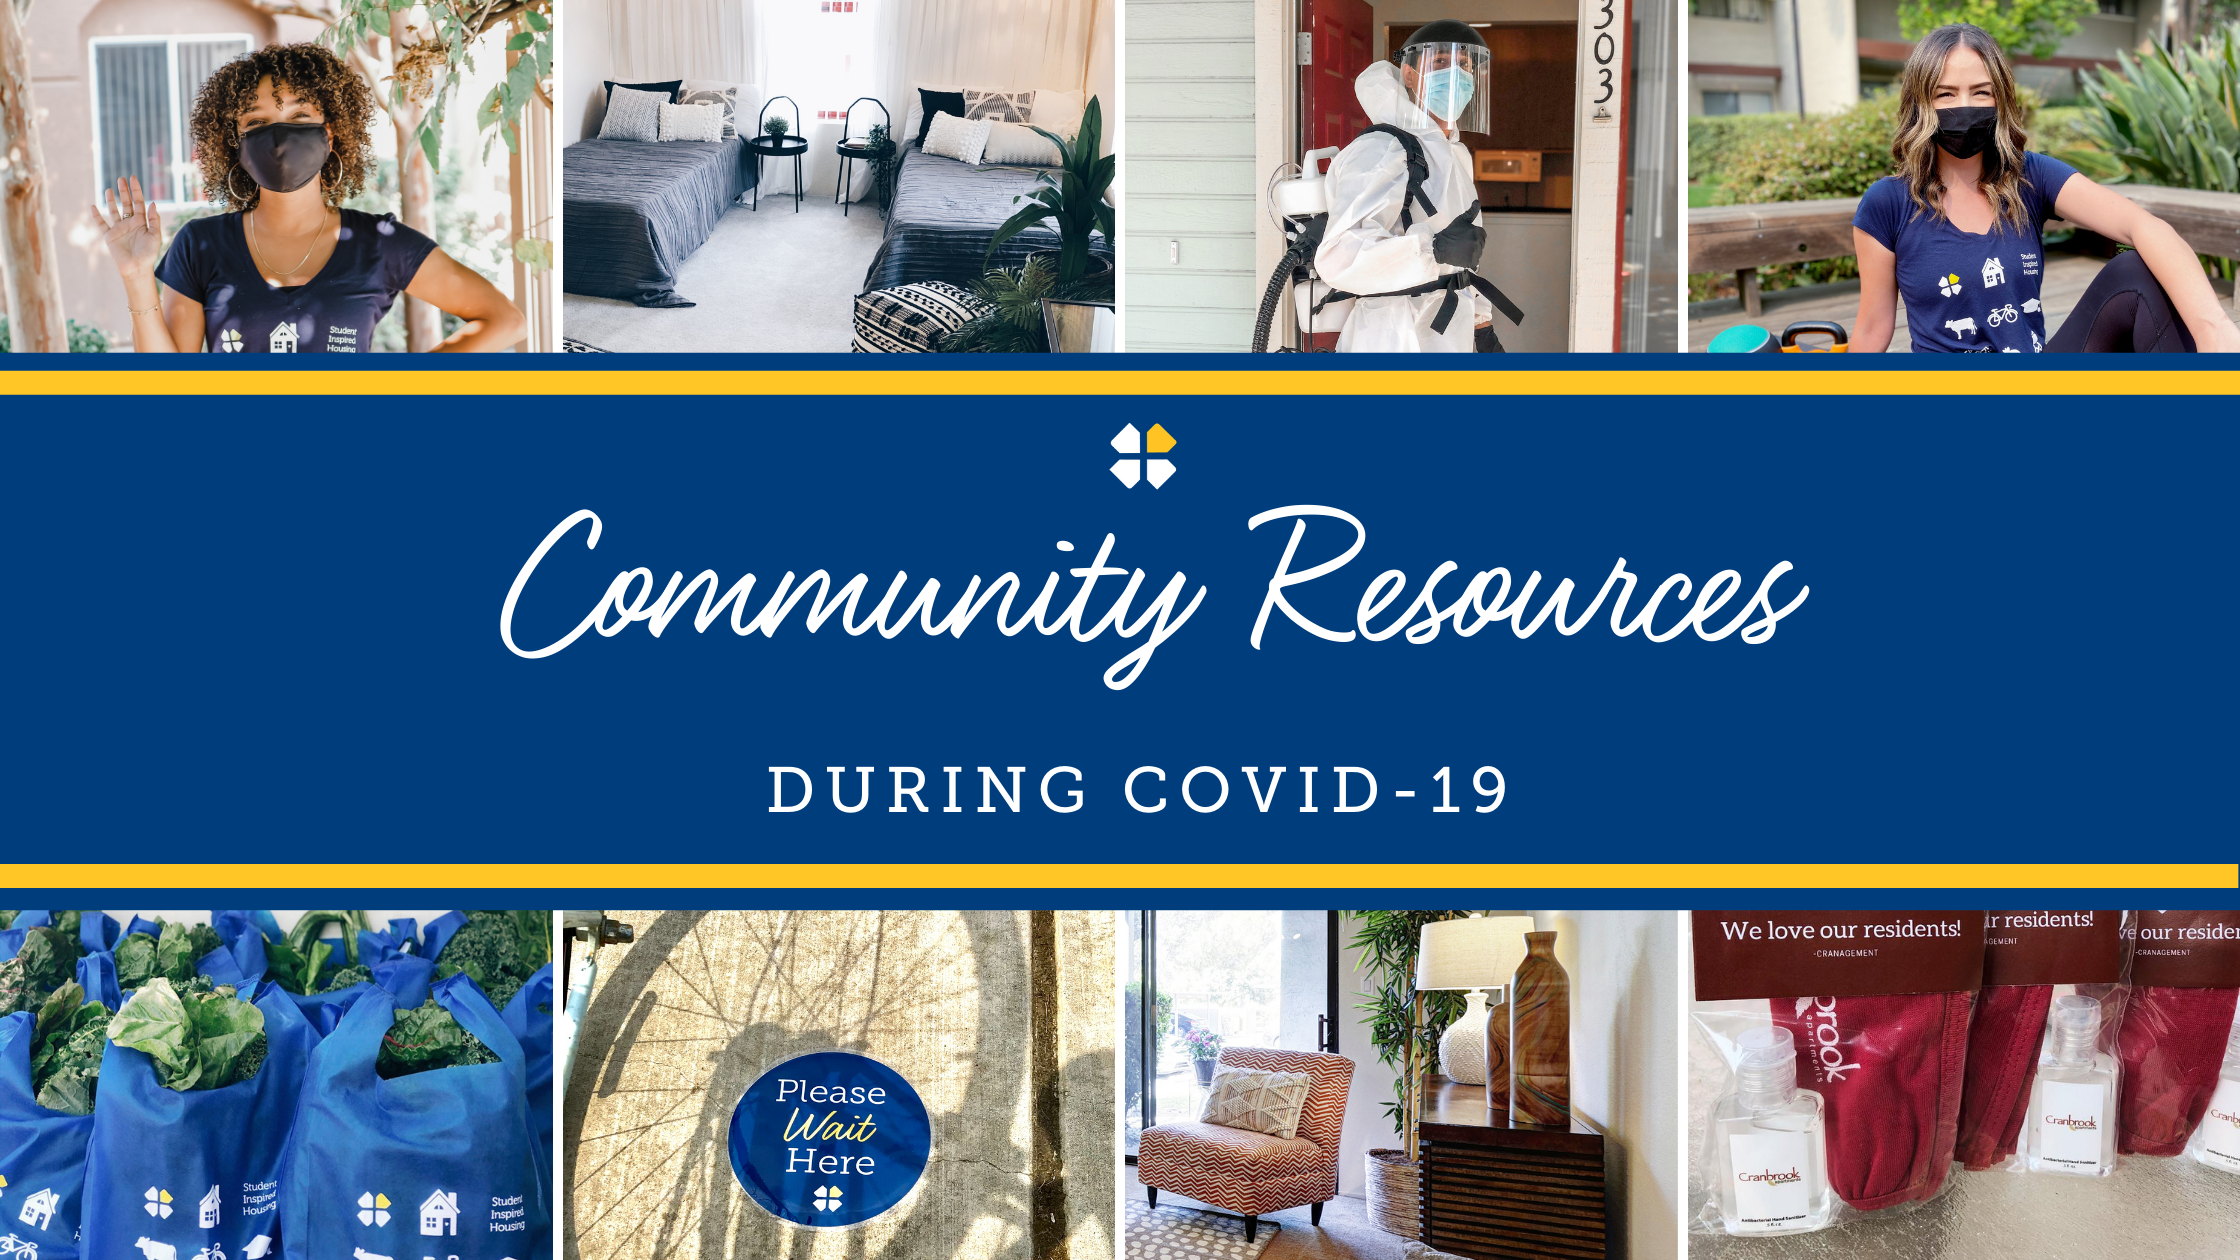 Davis Apartment Community Wellness During COVID-19